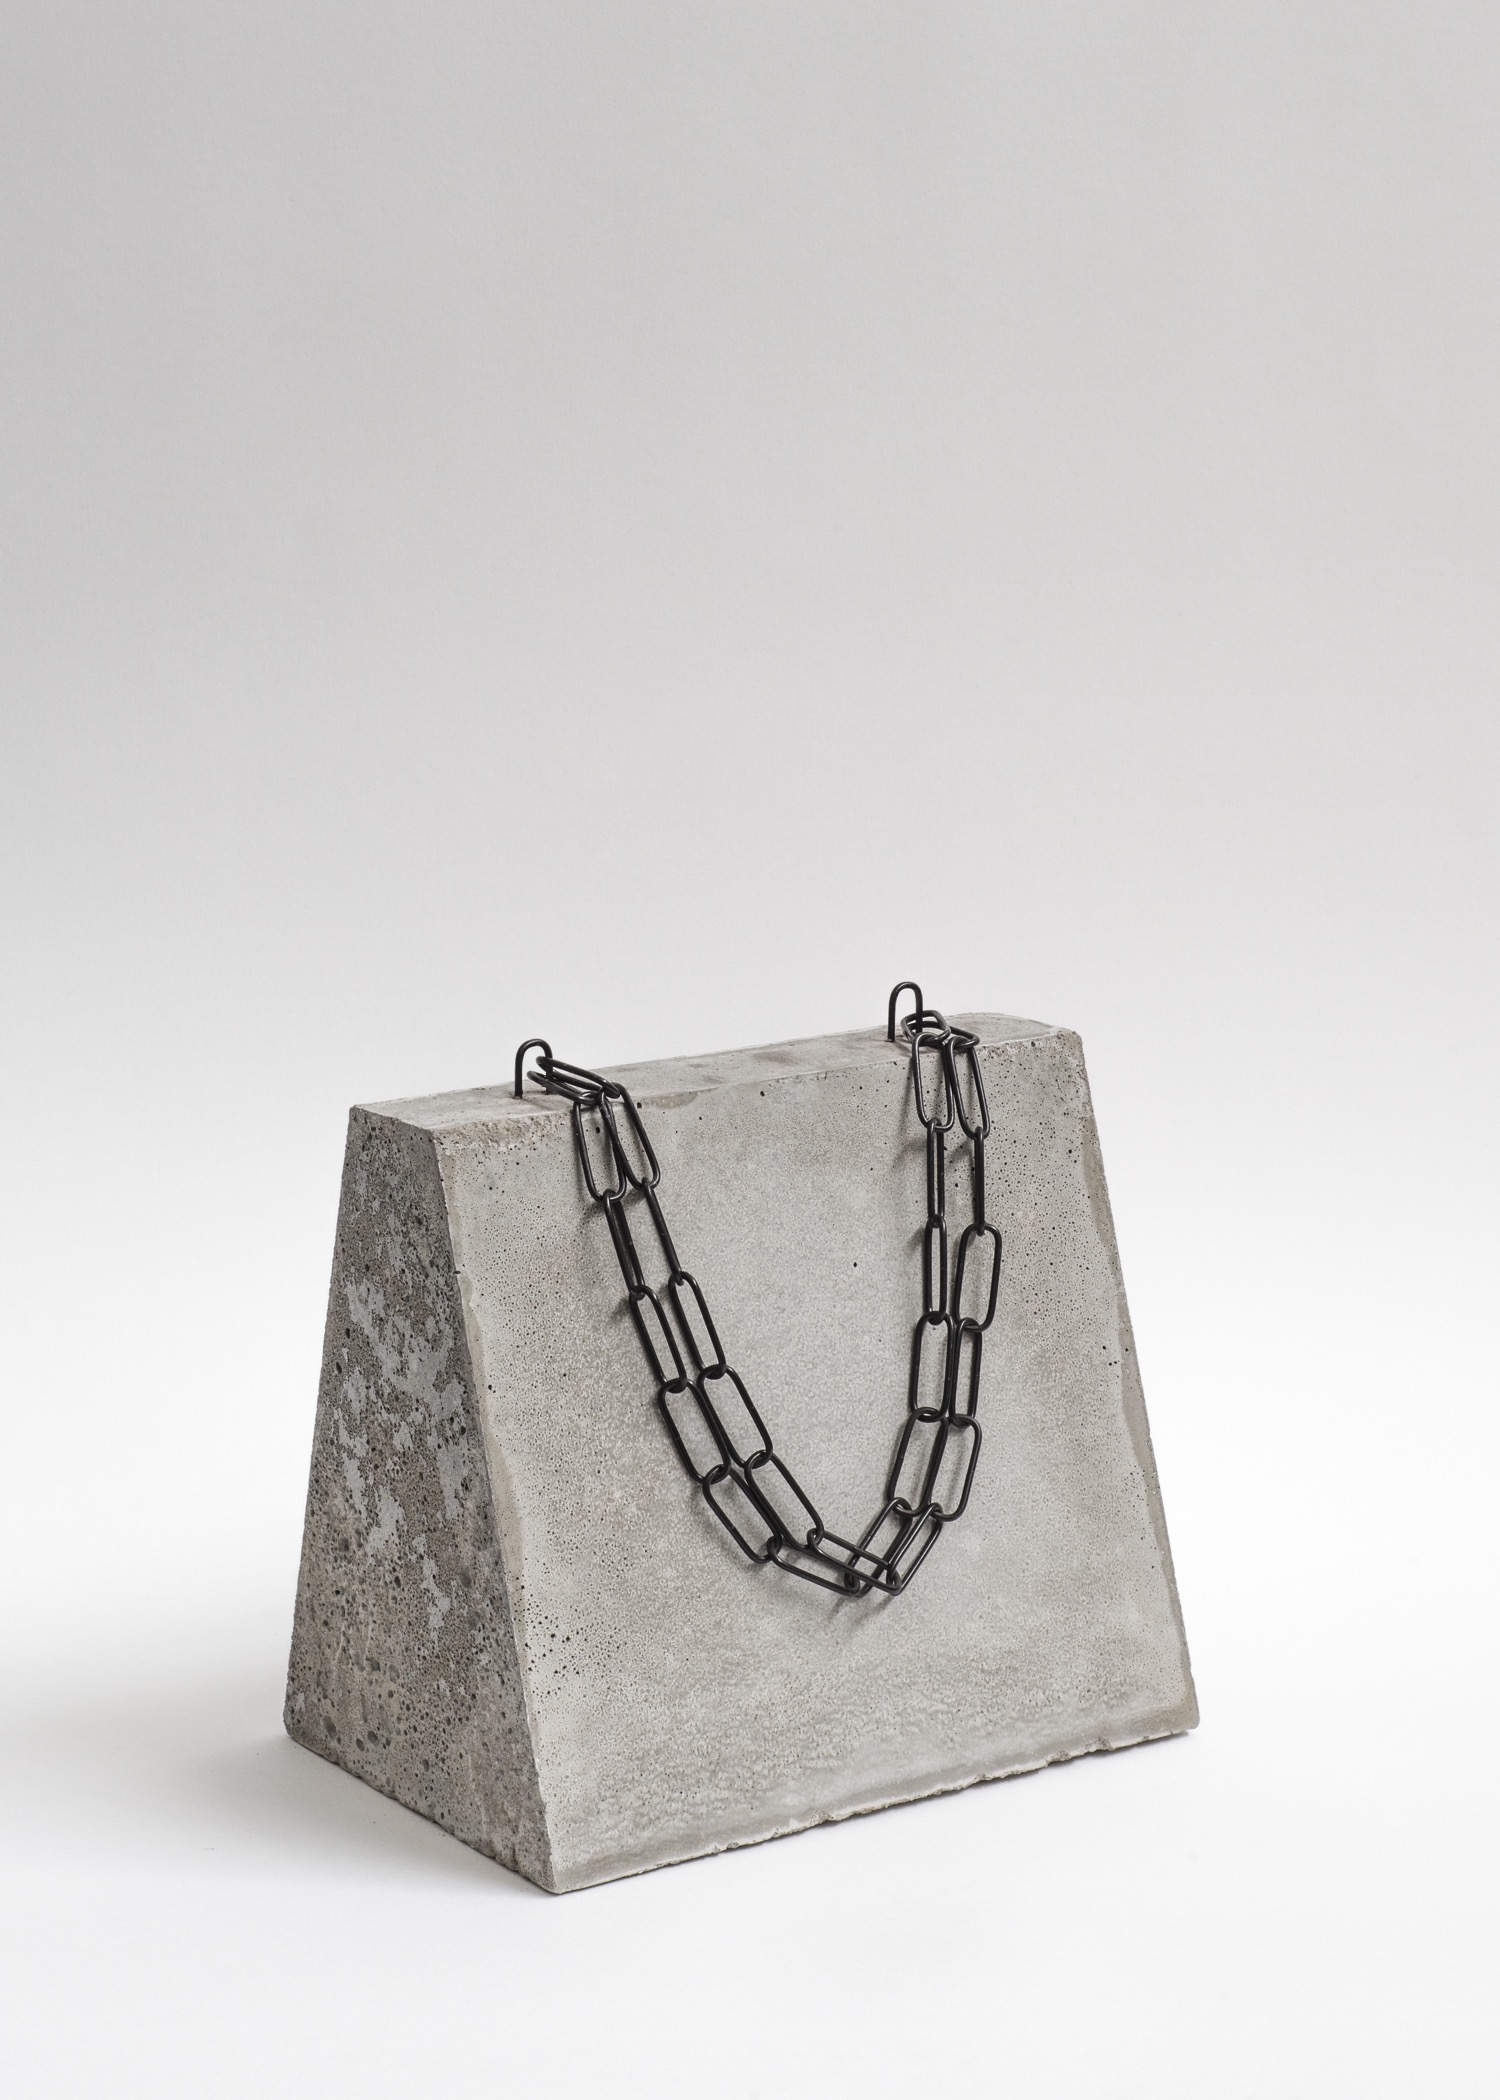 2 Chain Bag.Beton.Eisenkette.28:50x28x19,5cm.2018jpg